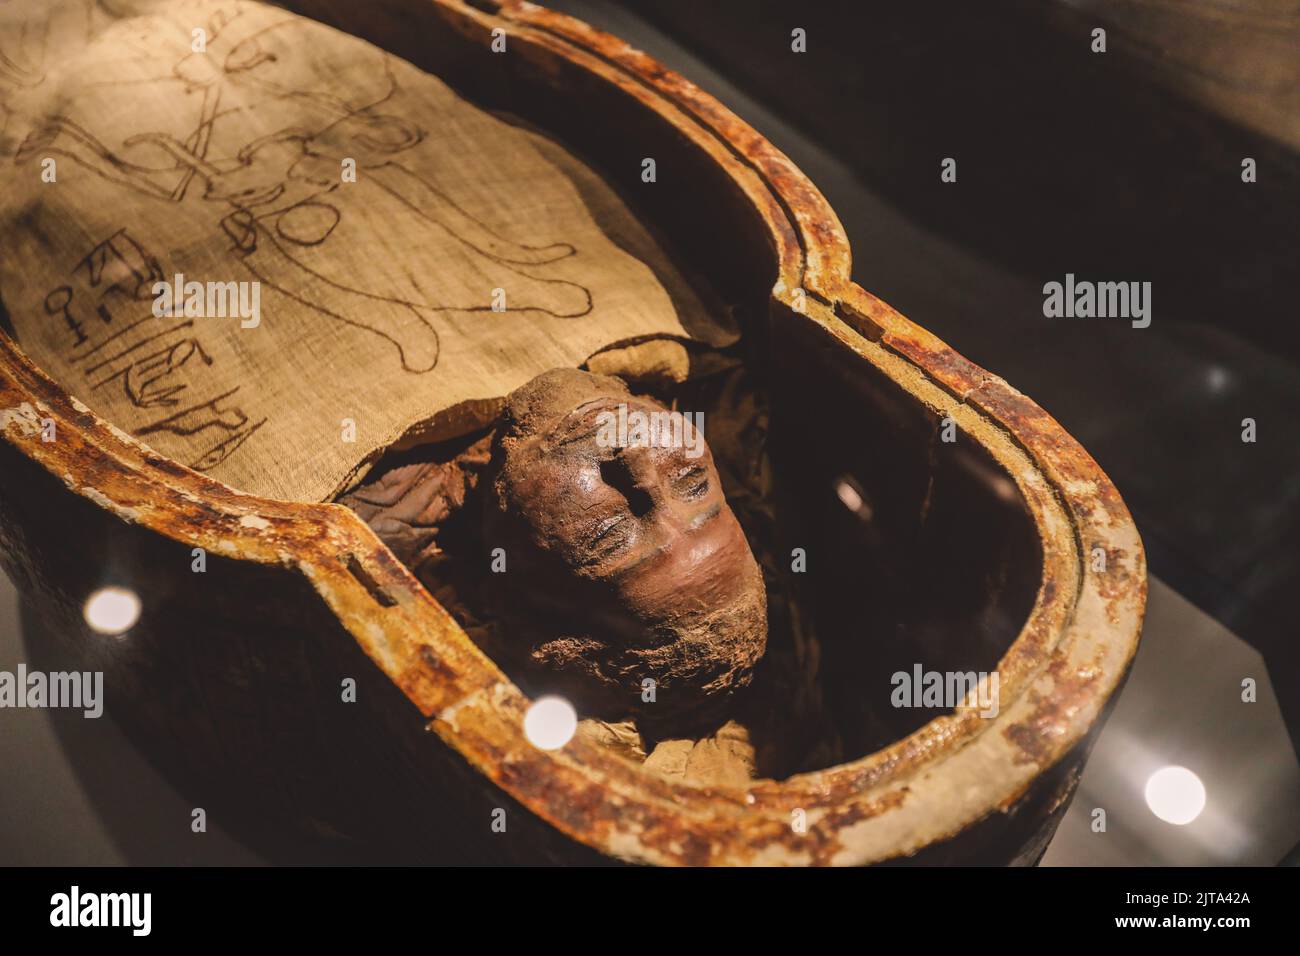 Luxor, Ägypten - 13. November 2020: Alte ägyptische Exponate des archäologischen Mumification Museums in Oberägypten Stockfoto